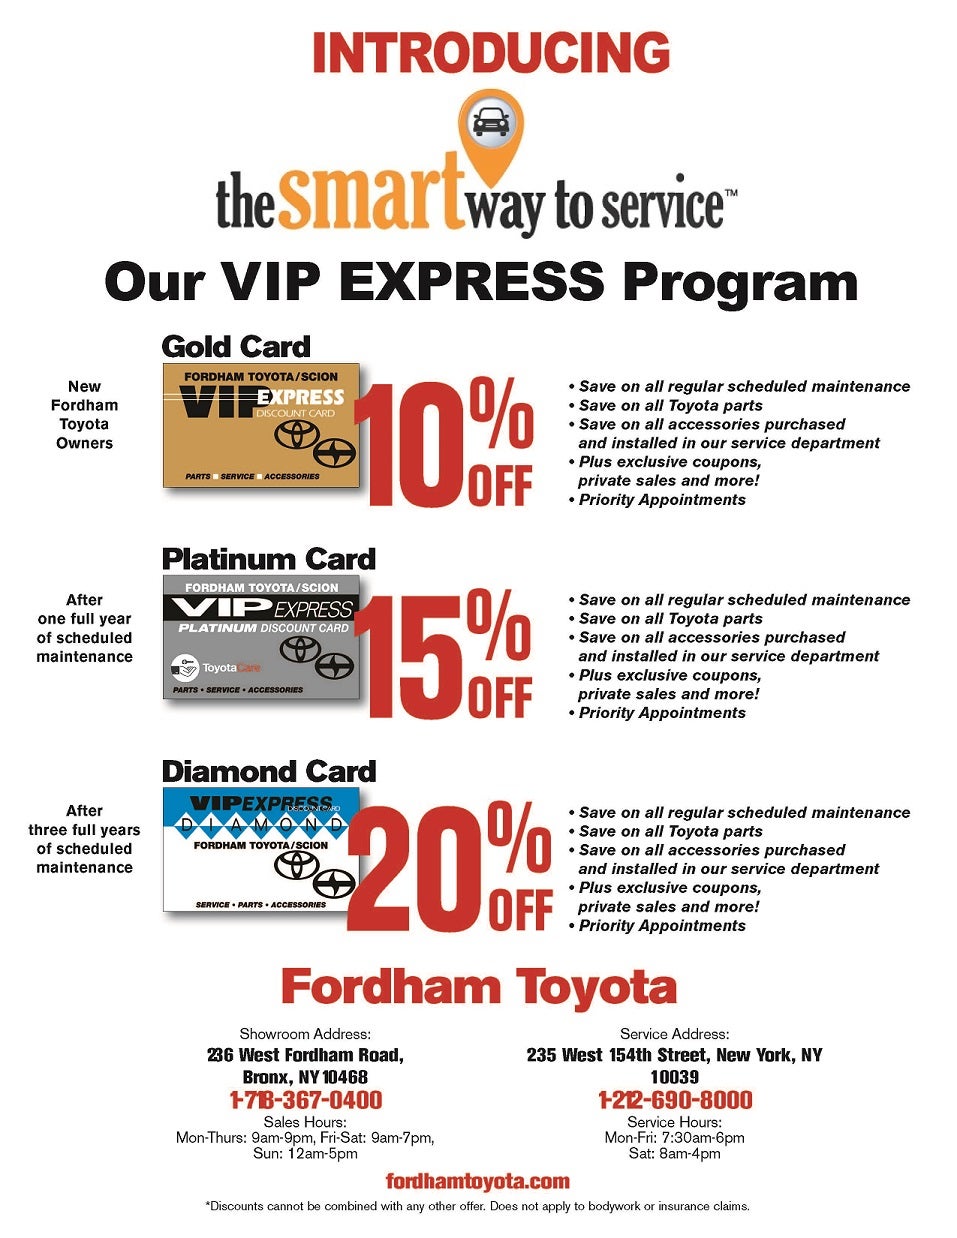 Fordham Toyota VIP EXPRESS Program - the smart way to service